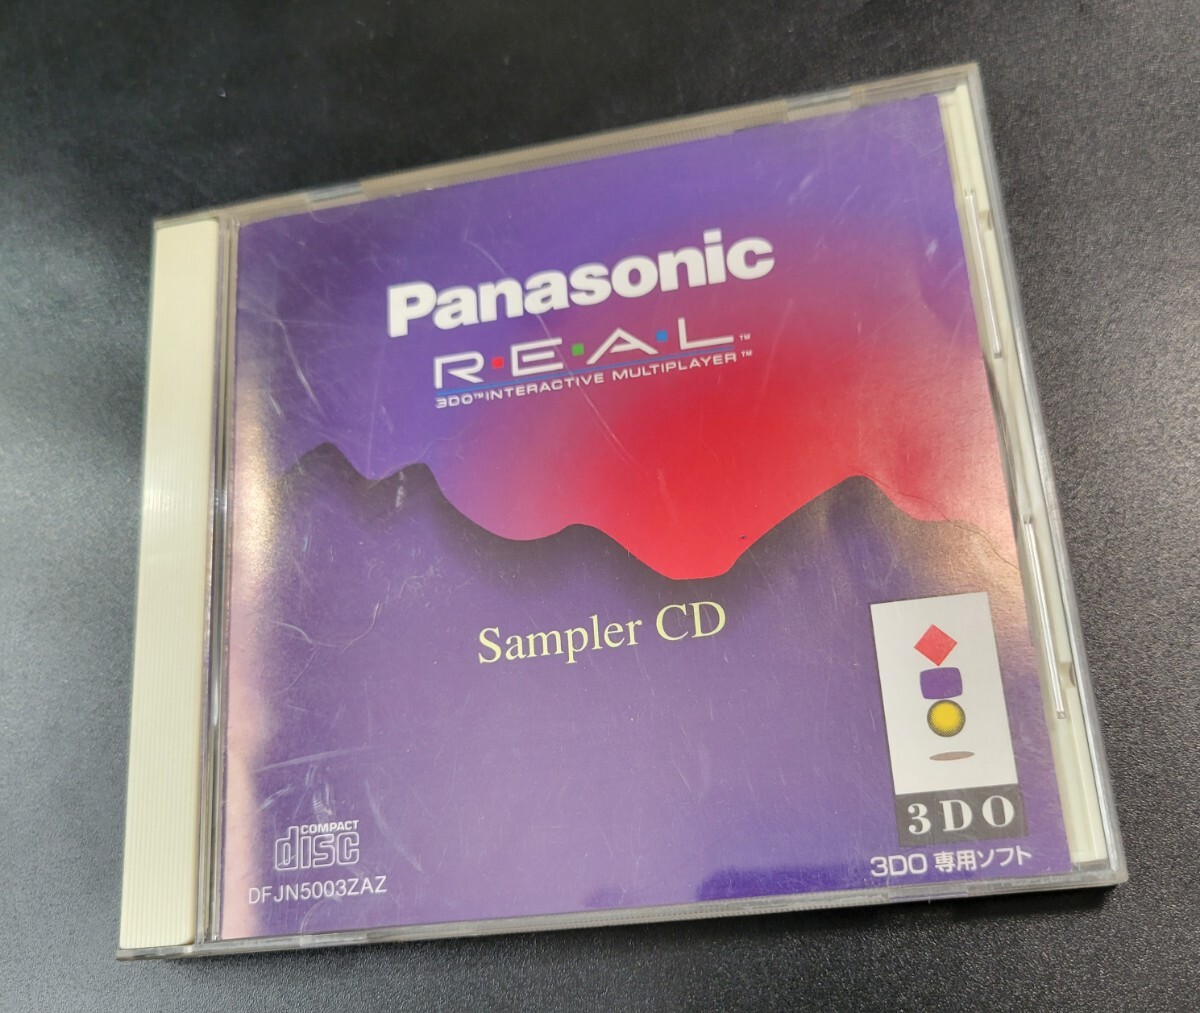 CD[Panasonic REAL Sampler CD 3DO exclusive use soft ] disk beautiful. 017